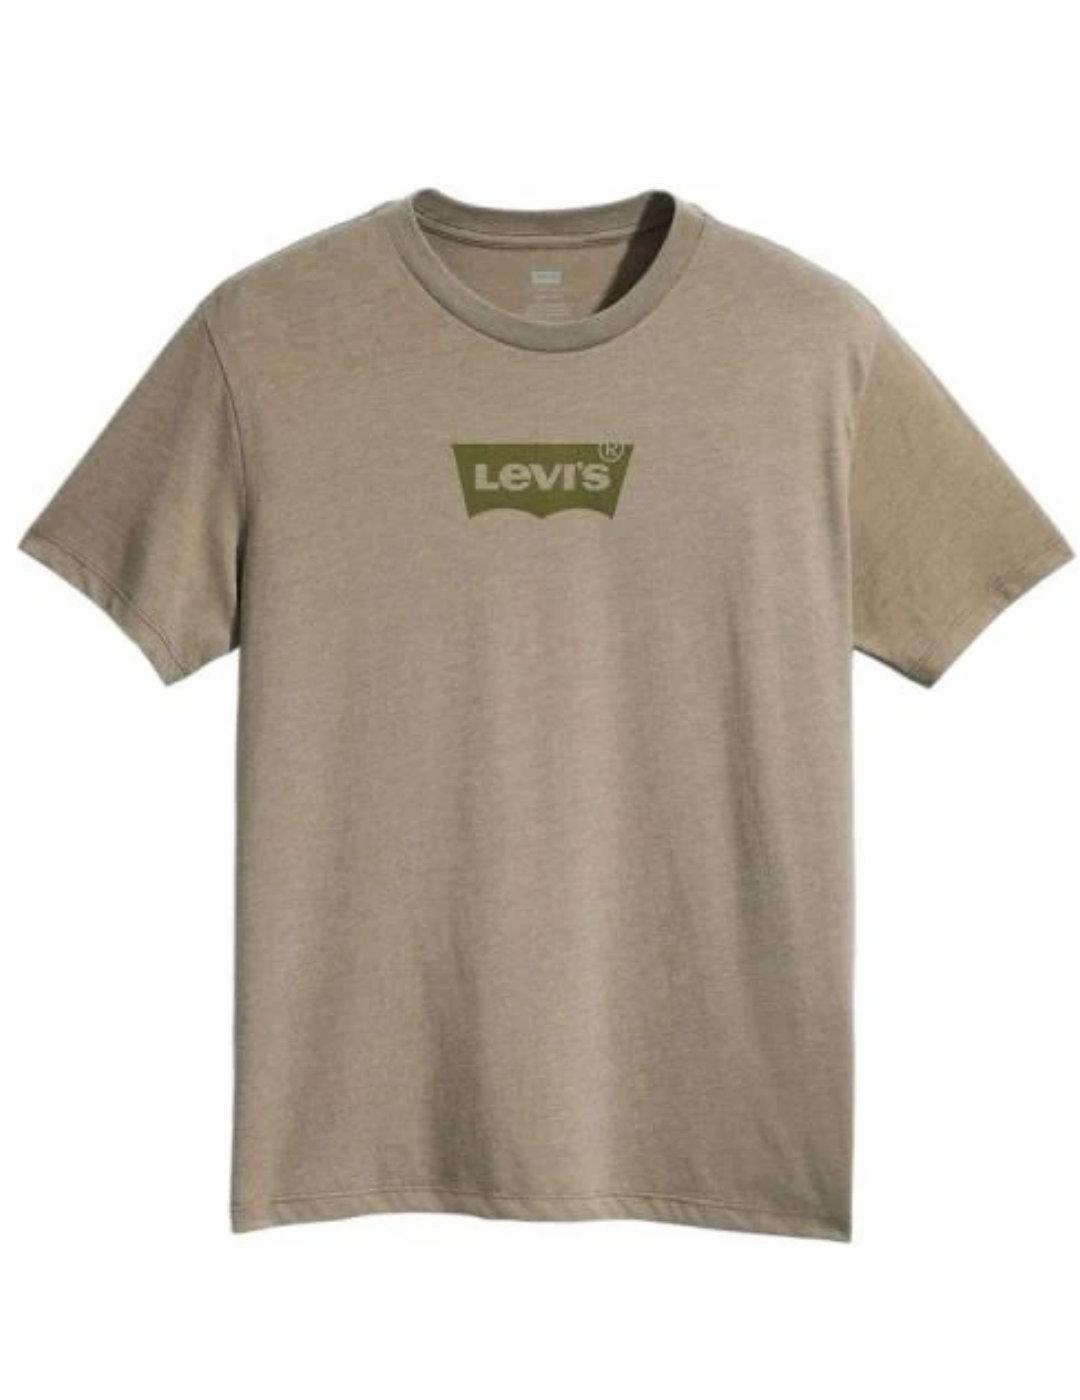 Camiseta Levi's logo verde militar manga corta de hombre